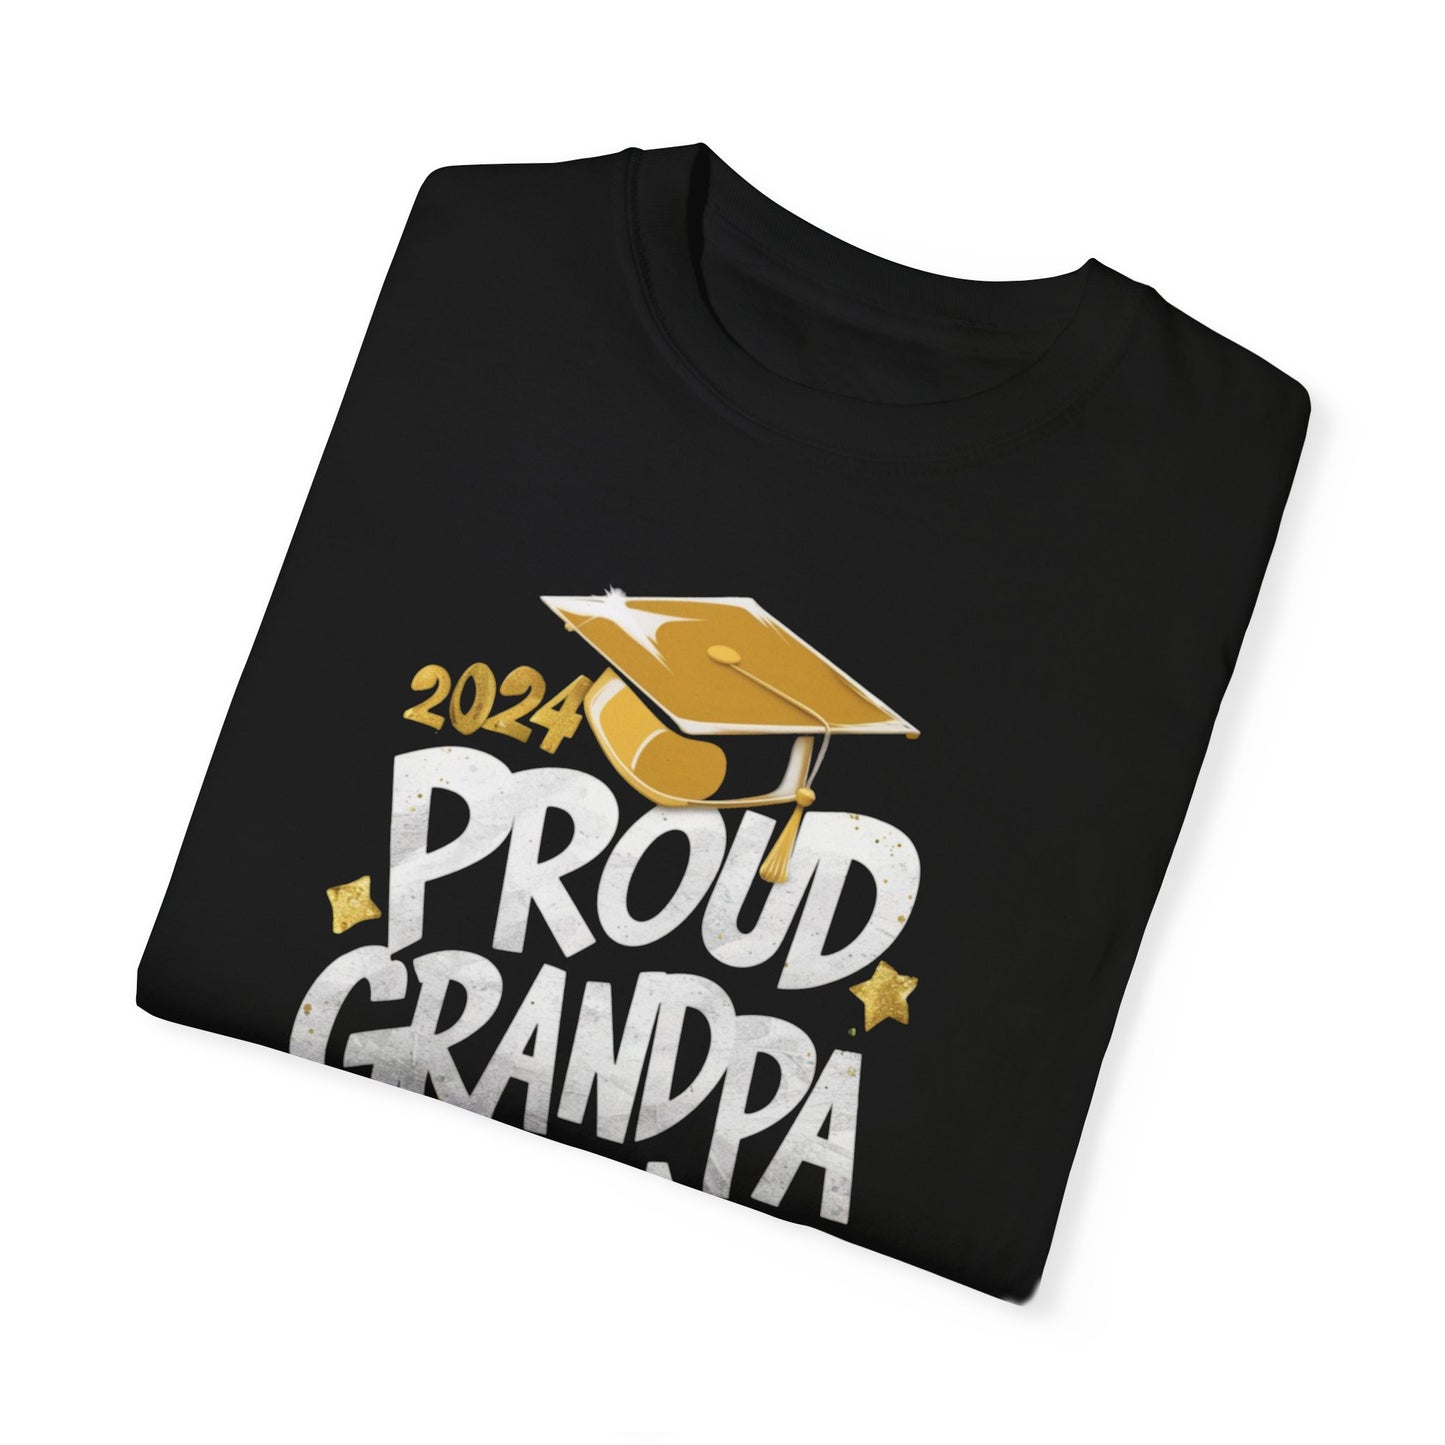 Proud Grandpa of a 2024 Graduate Unisex Garment-dyed T-shirt Cotton Funny Humorous Graphic Soft Premium Unisex Men Women Black T-shirt Birthday Gift-17